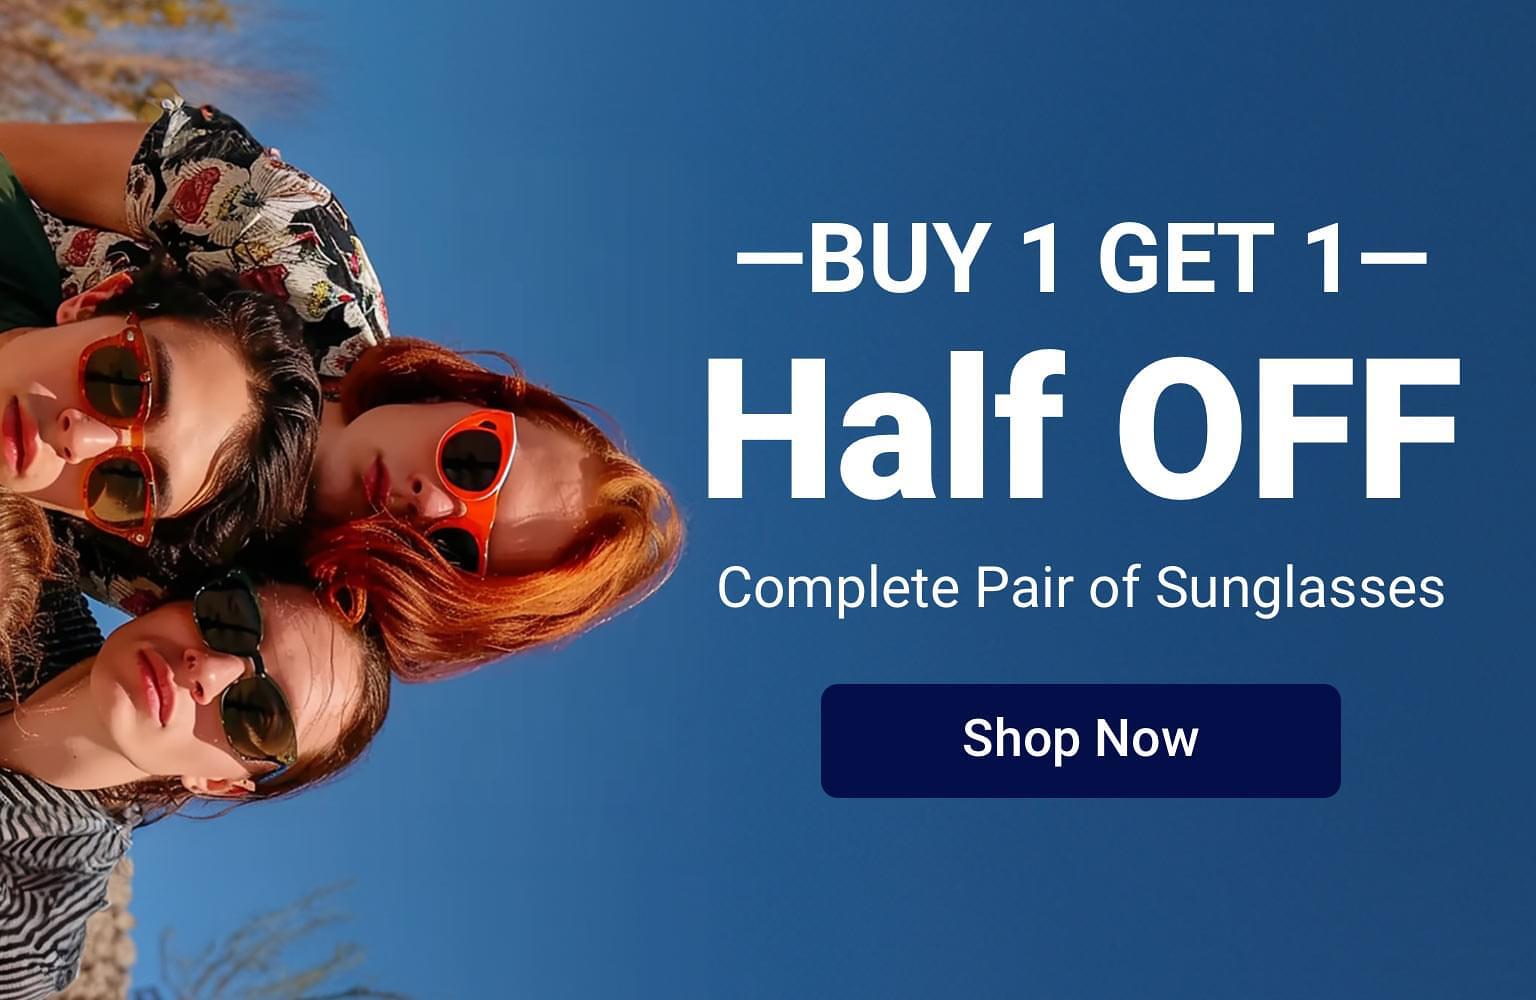 Buy 1 Get 1 Half Off Sunglasses